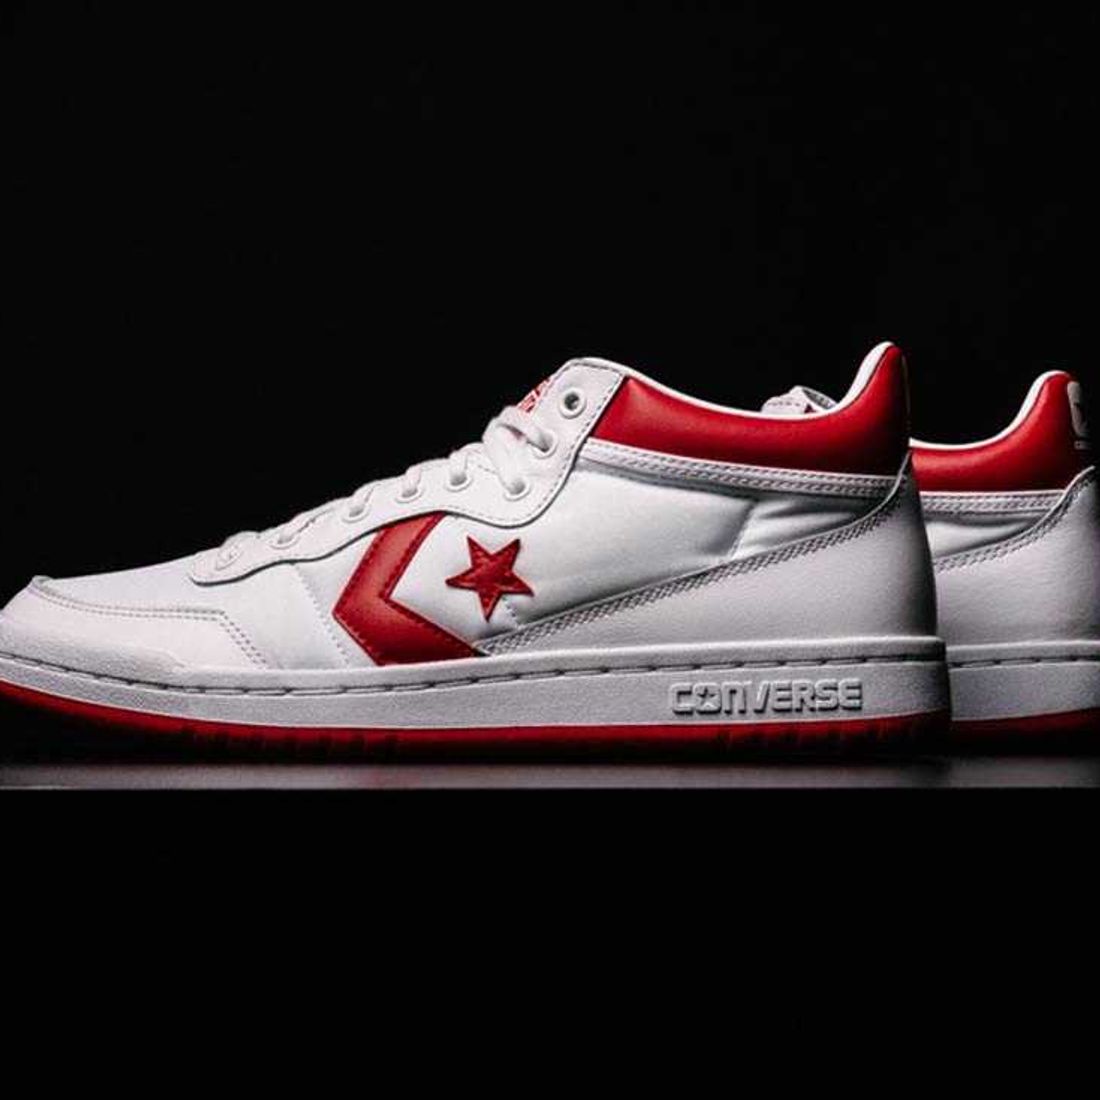 Michael Jordan 1984 Olympic Converse Sneakers Top $190K